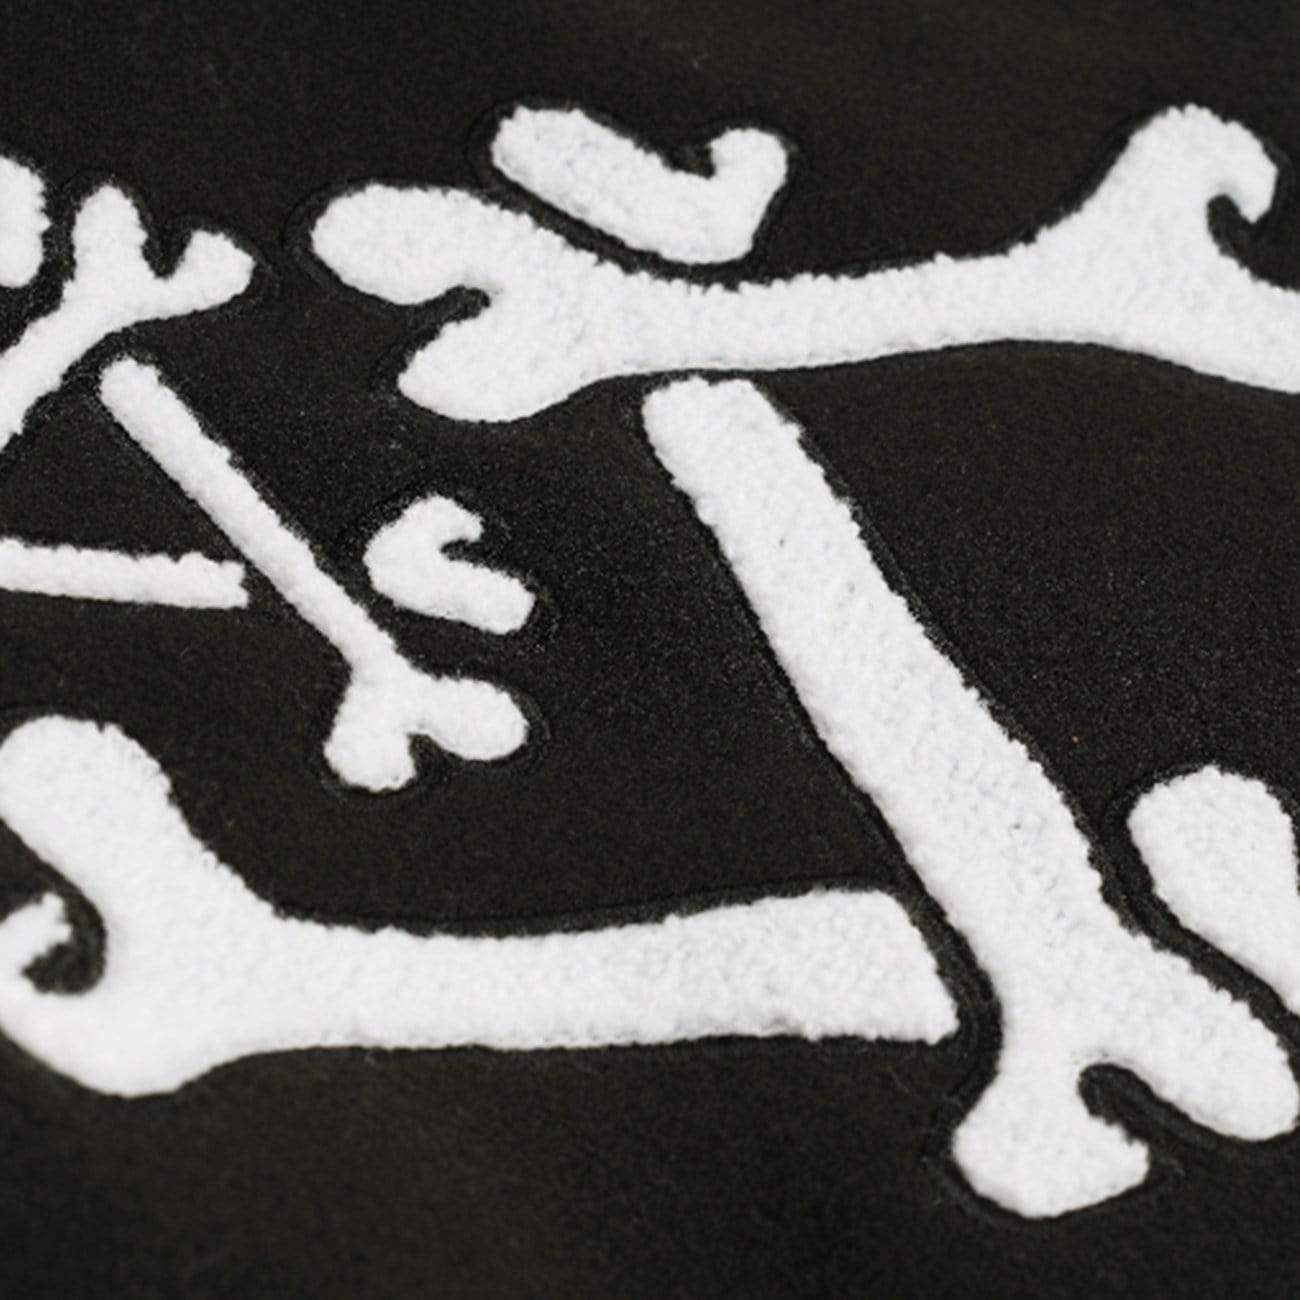 Vintage Patchwork Skeleton Bones Embroidery Varsity Jacket